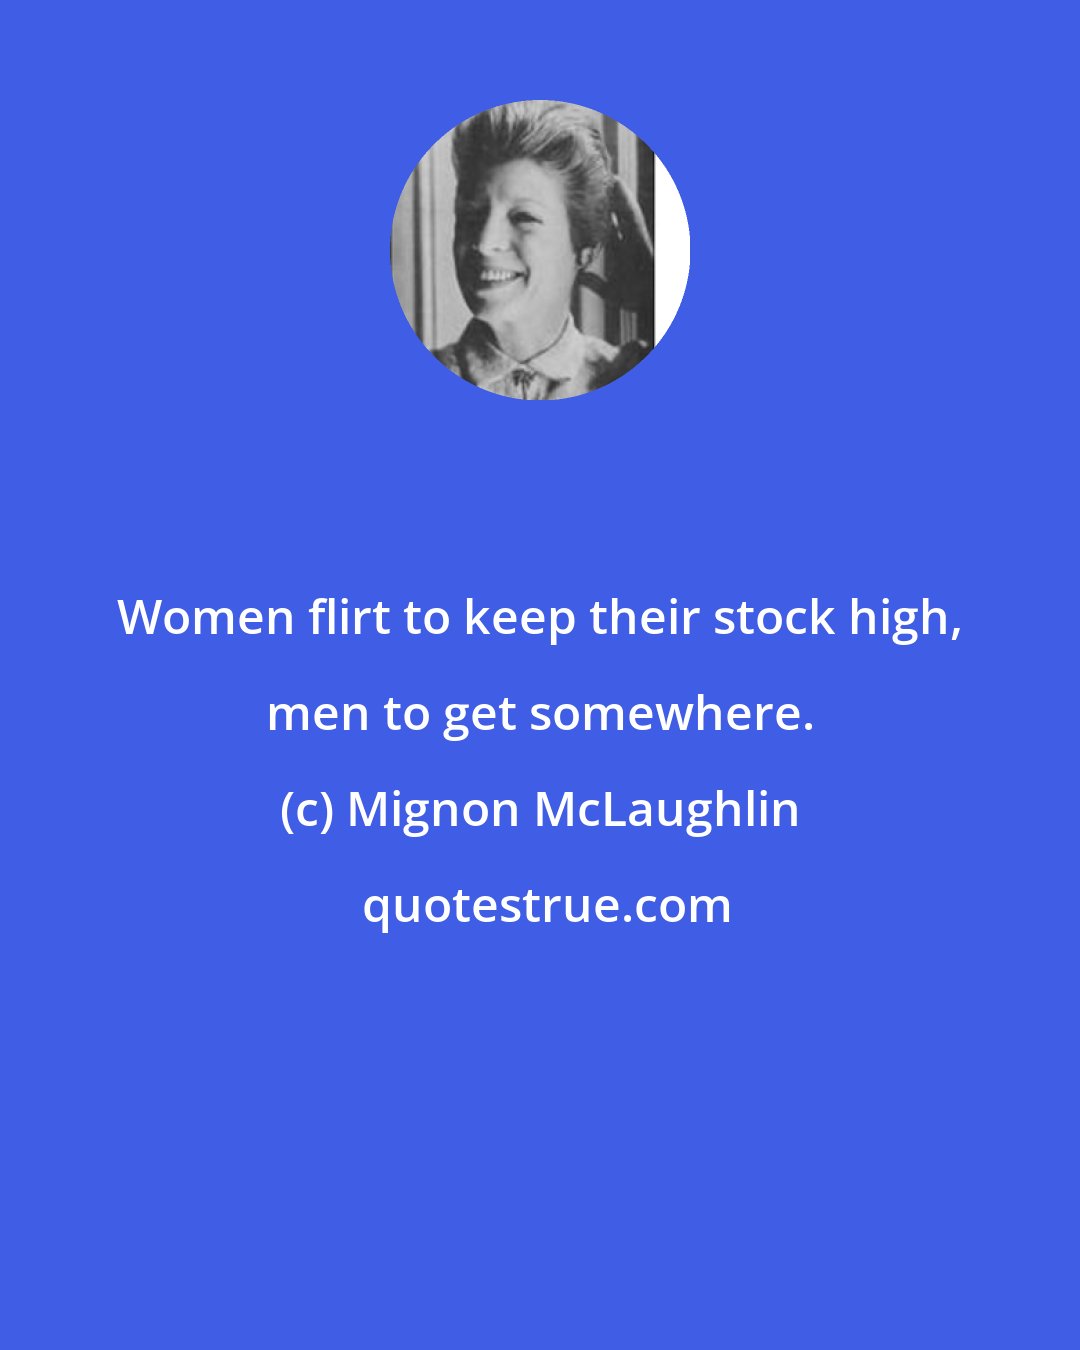 Mignon McLaughlin: Women flirt to keep their stock high, men to get somewhere.